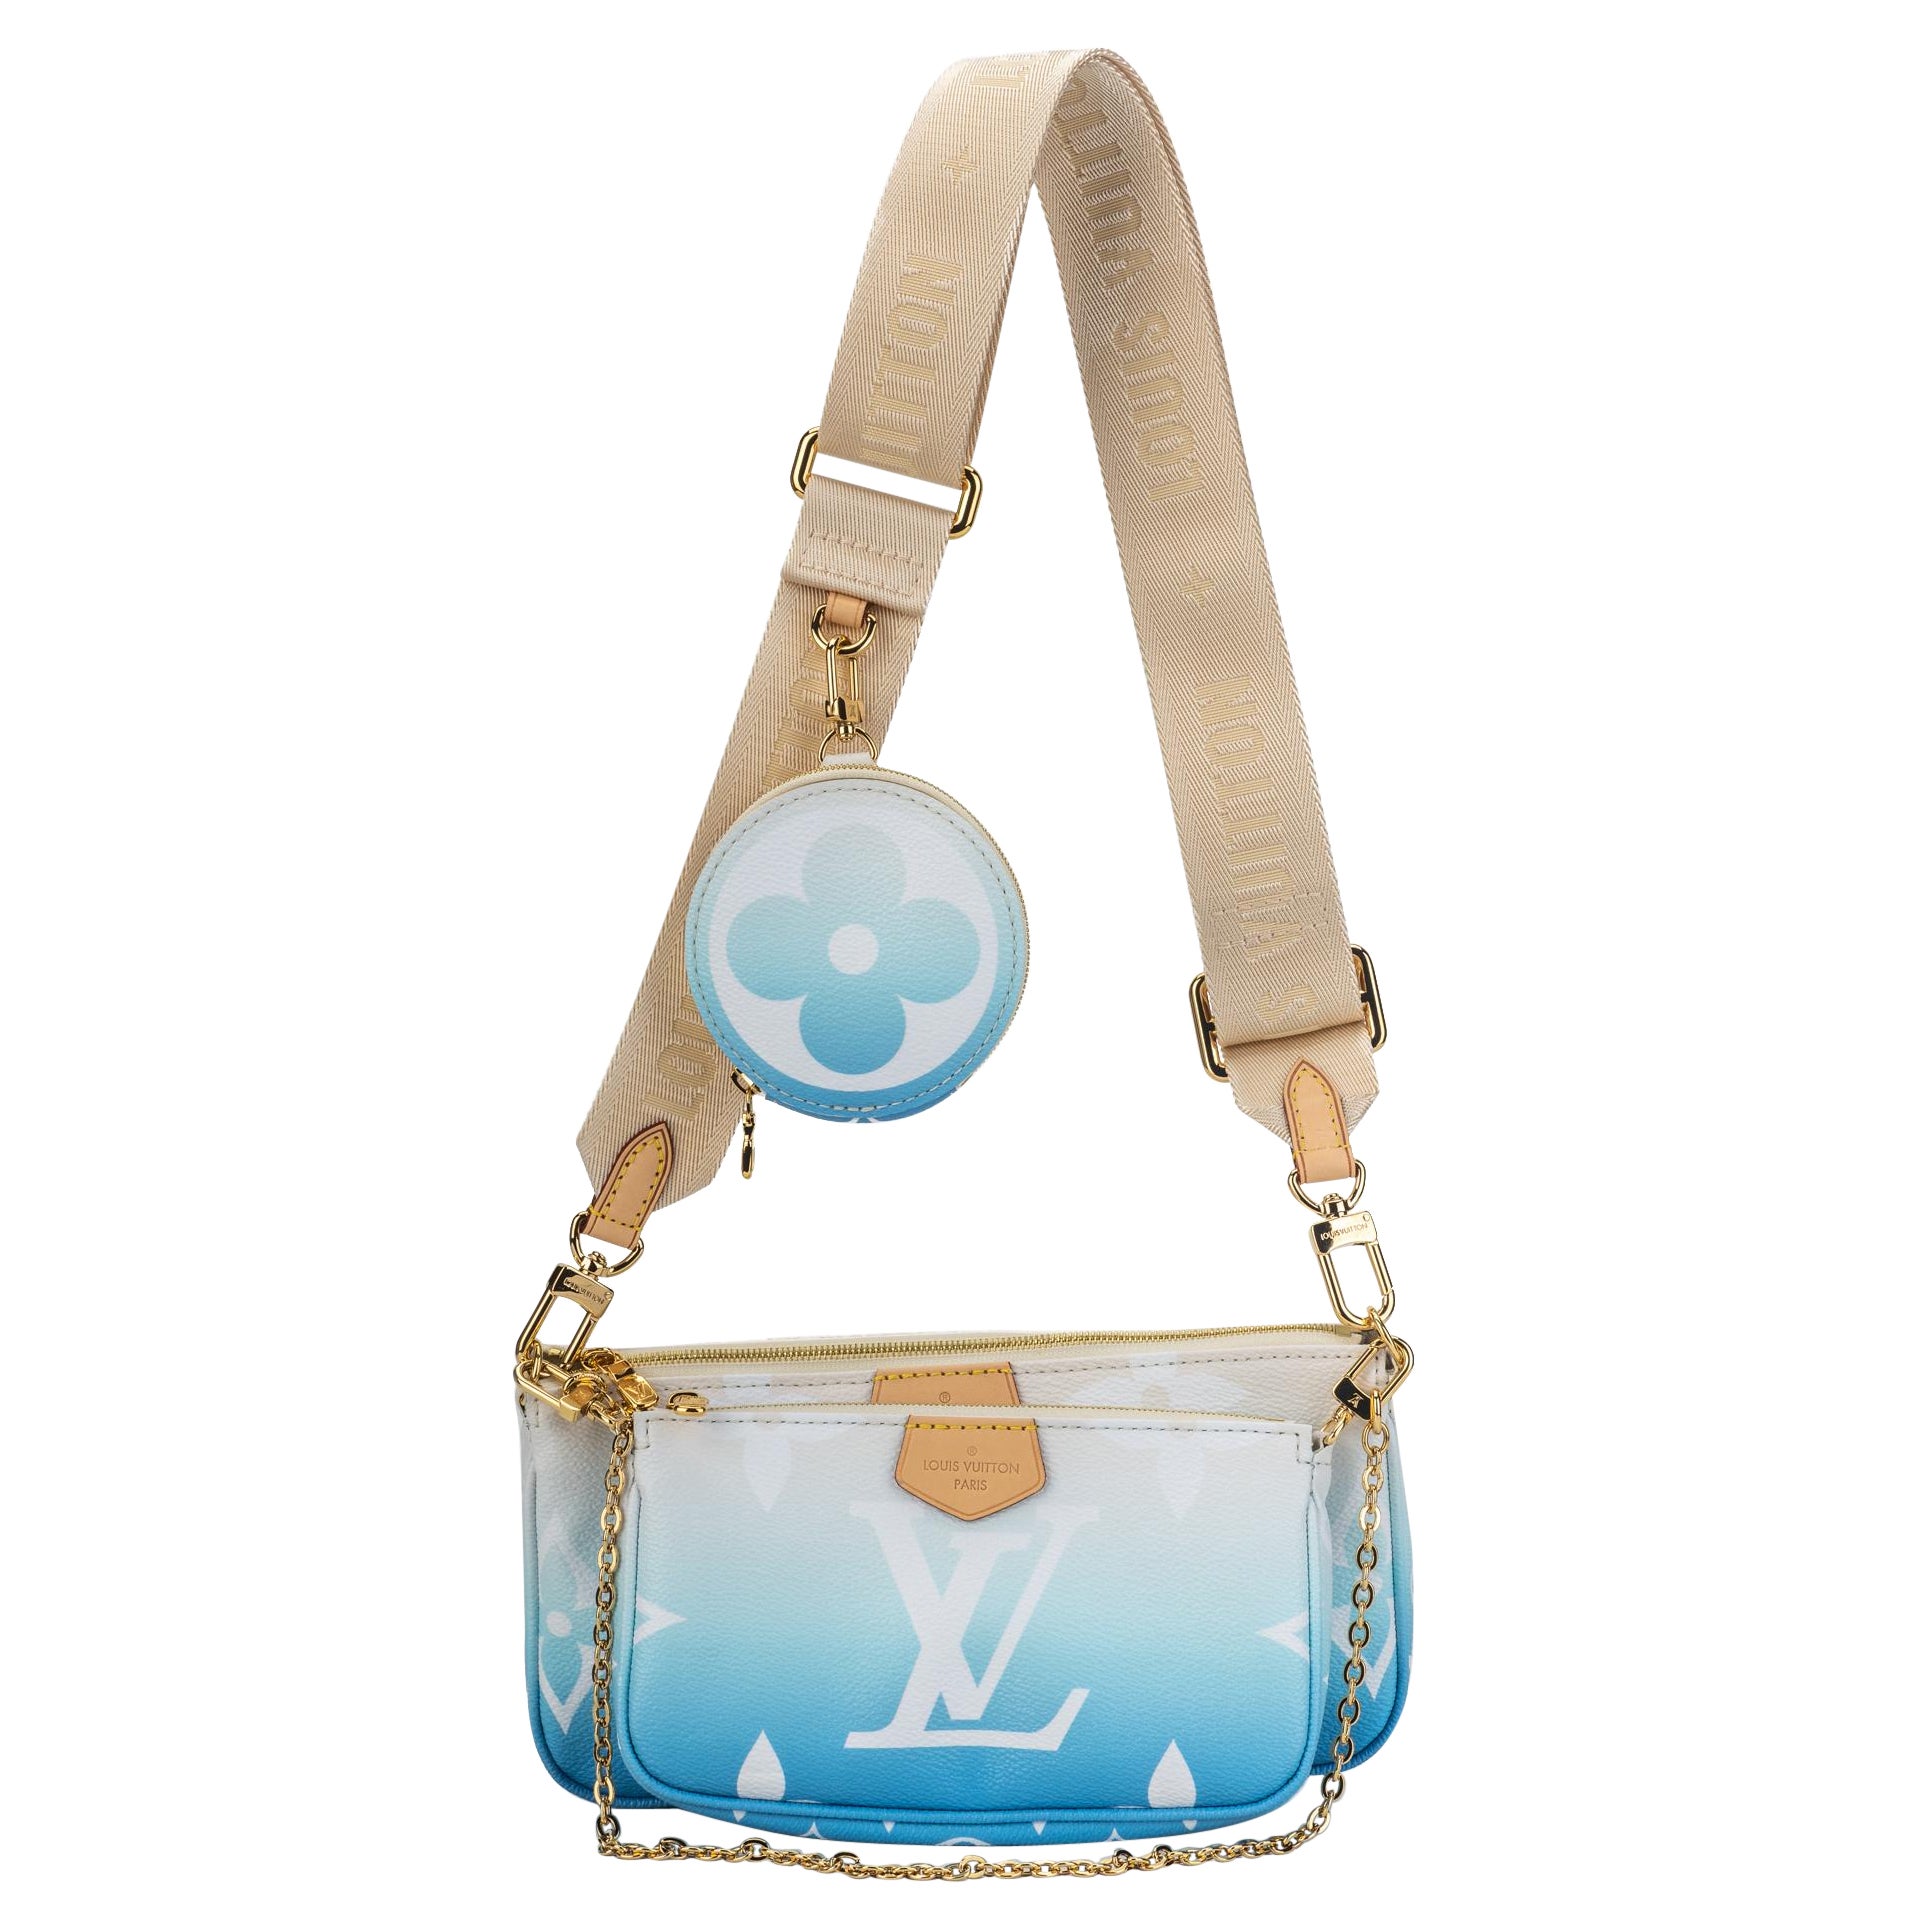 New Louis Vuitton Limited Edition Blue Multi Pochette Bag in Box